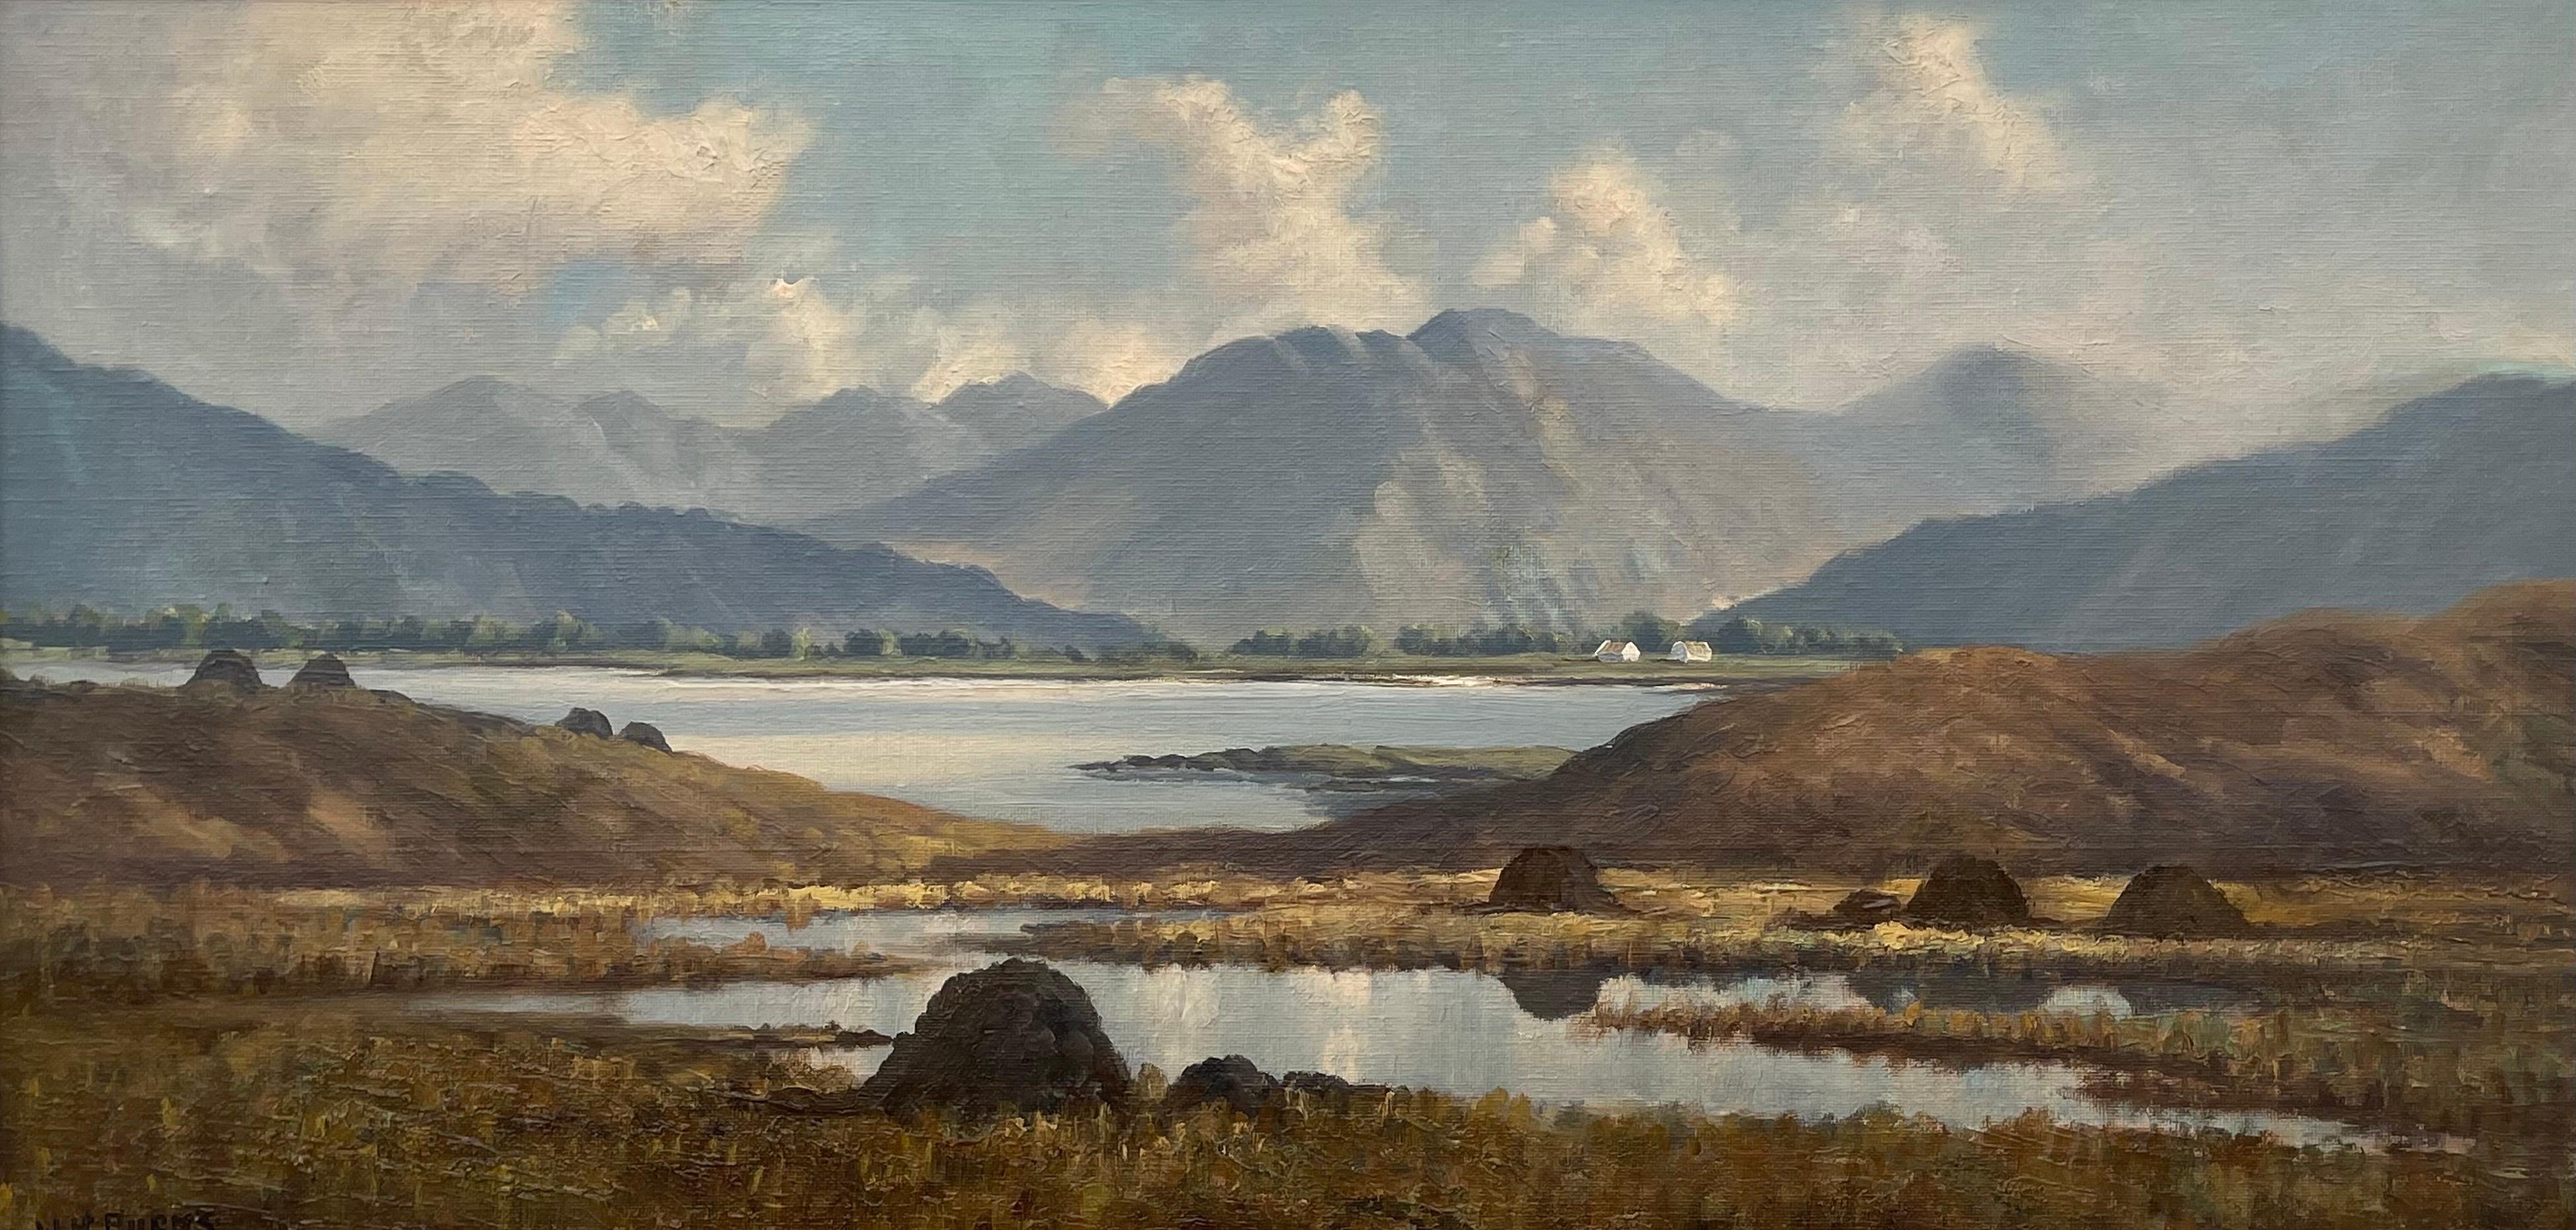 Oil Painting of Mountain Lake Scene in Connemara Ireland by Modern Irish Artist - Brown Figurative Painting by William Henry Burns